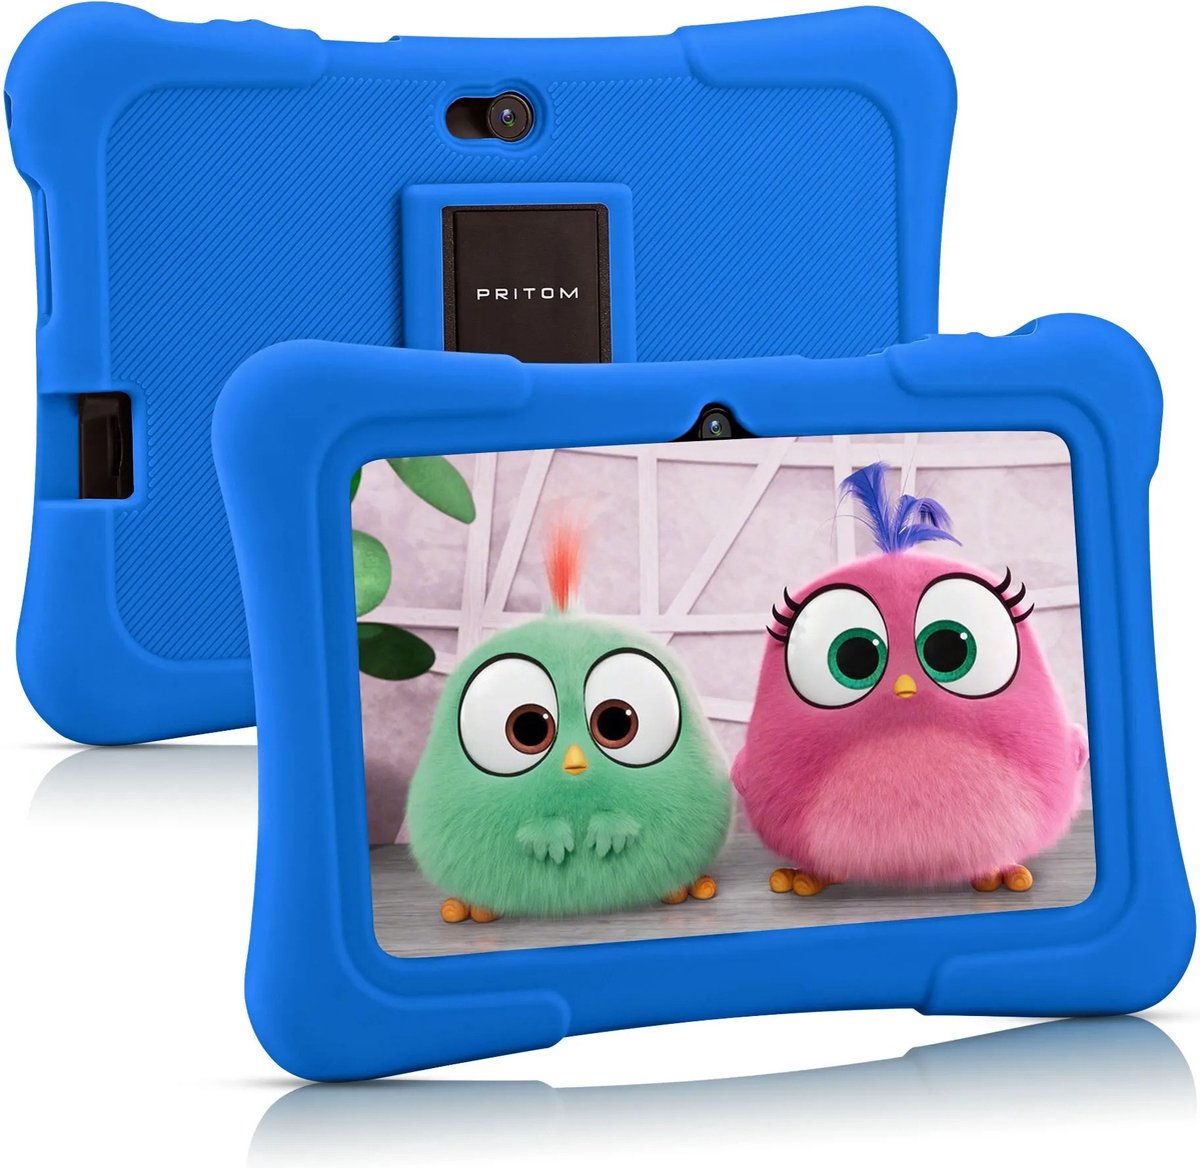 Homesell - PRITOM Kindertablet - Tablet - 7 Inch - 2023 model - Android 10.0 - Langdurig gebruik - Kids Proof - 32GB - Kindertablet vanaf 3 jaar - Kinder Tablet - Gratis Beschermende Hoes - Blauw